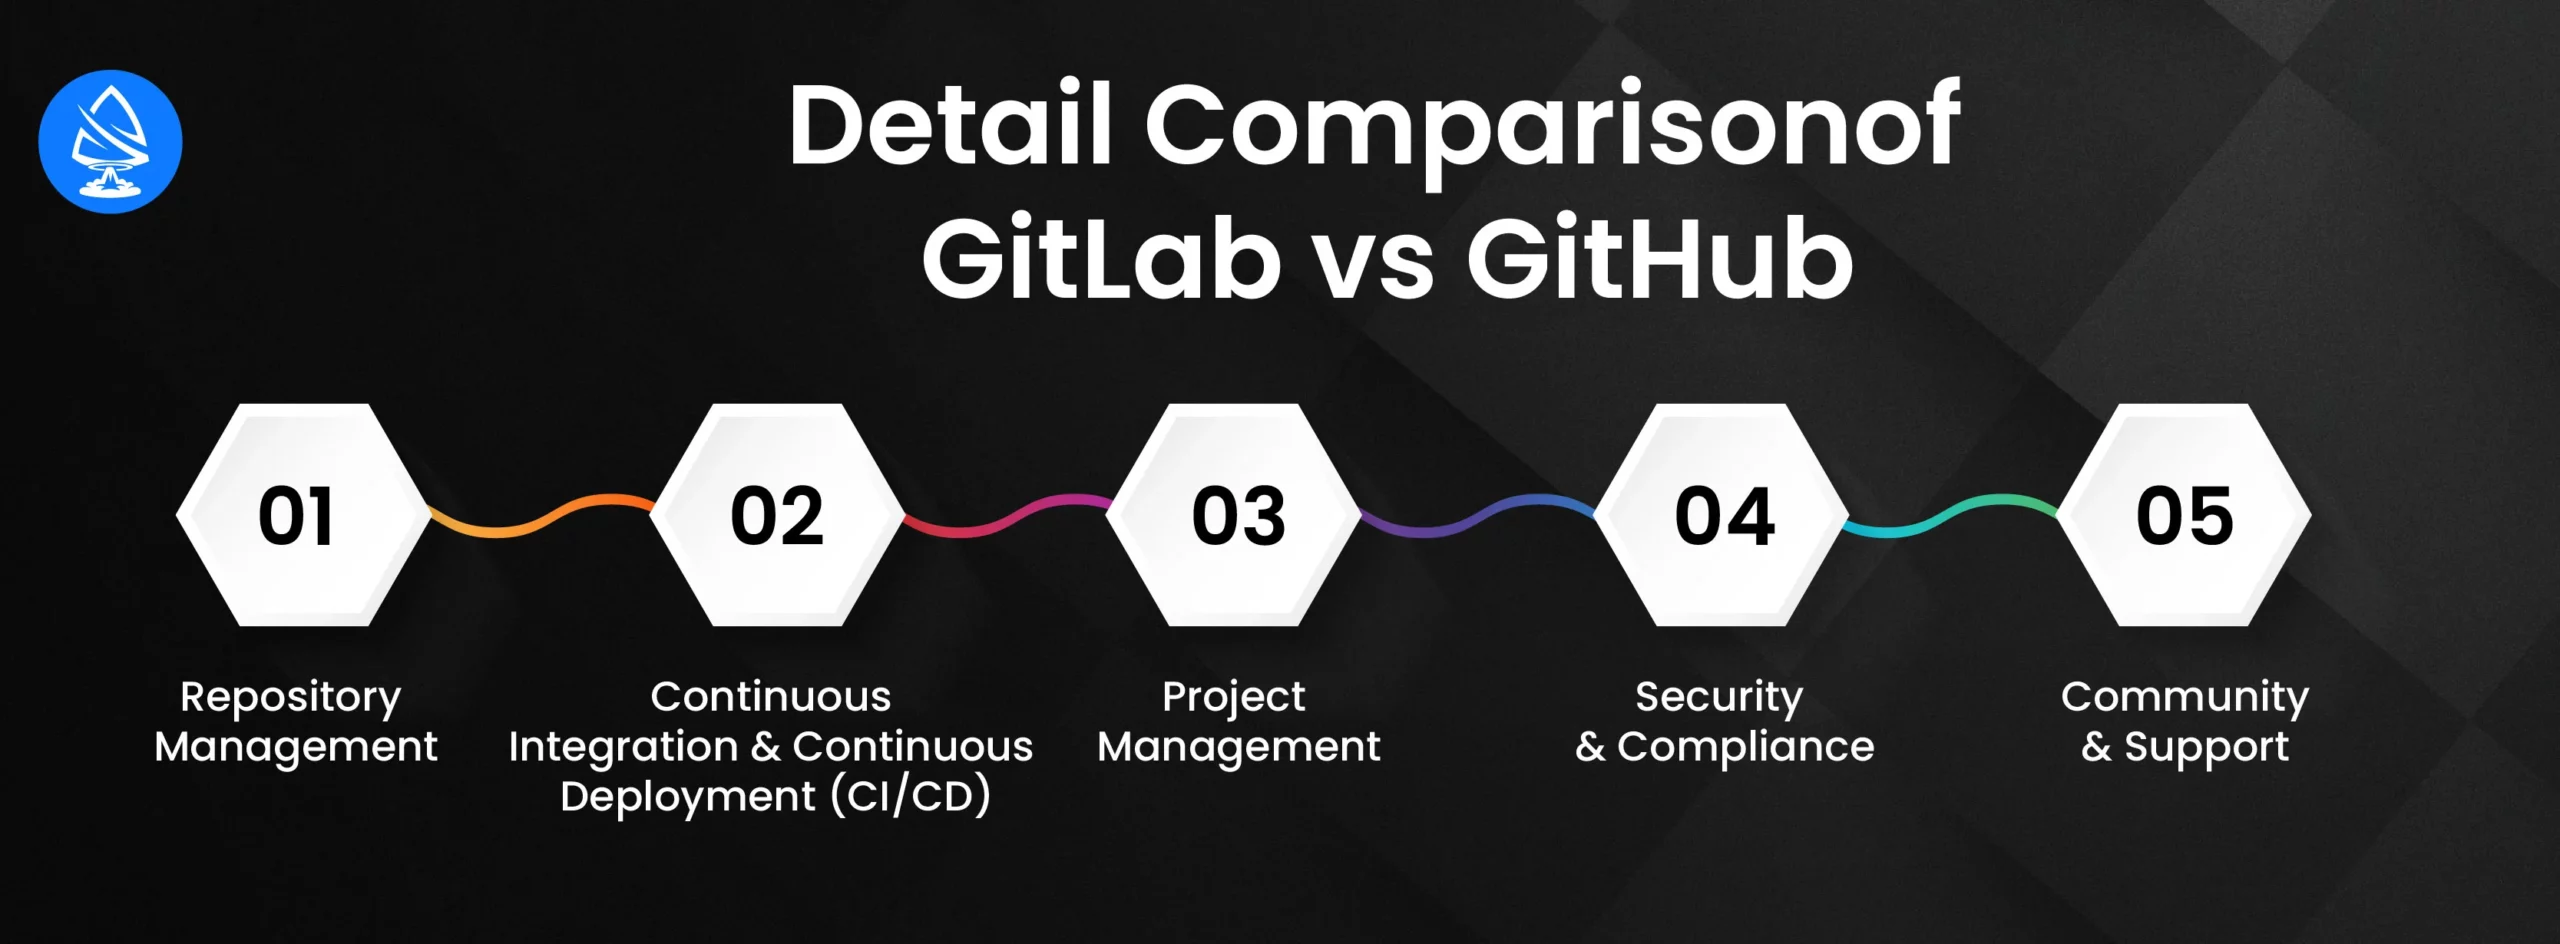 Detail Comparison of GitLab vs GitHub